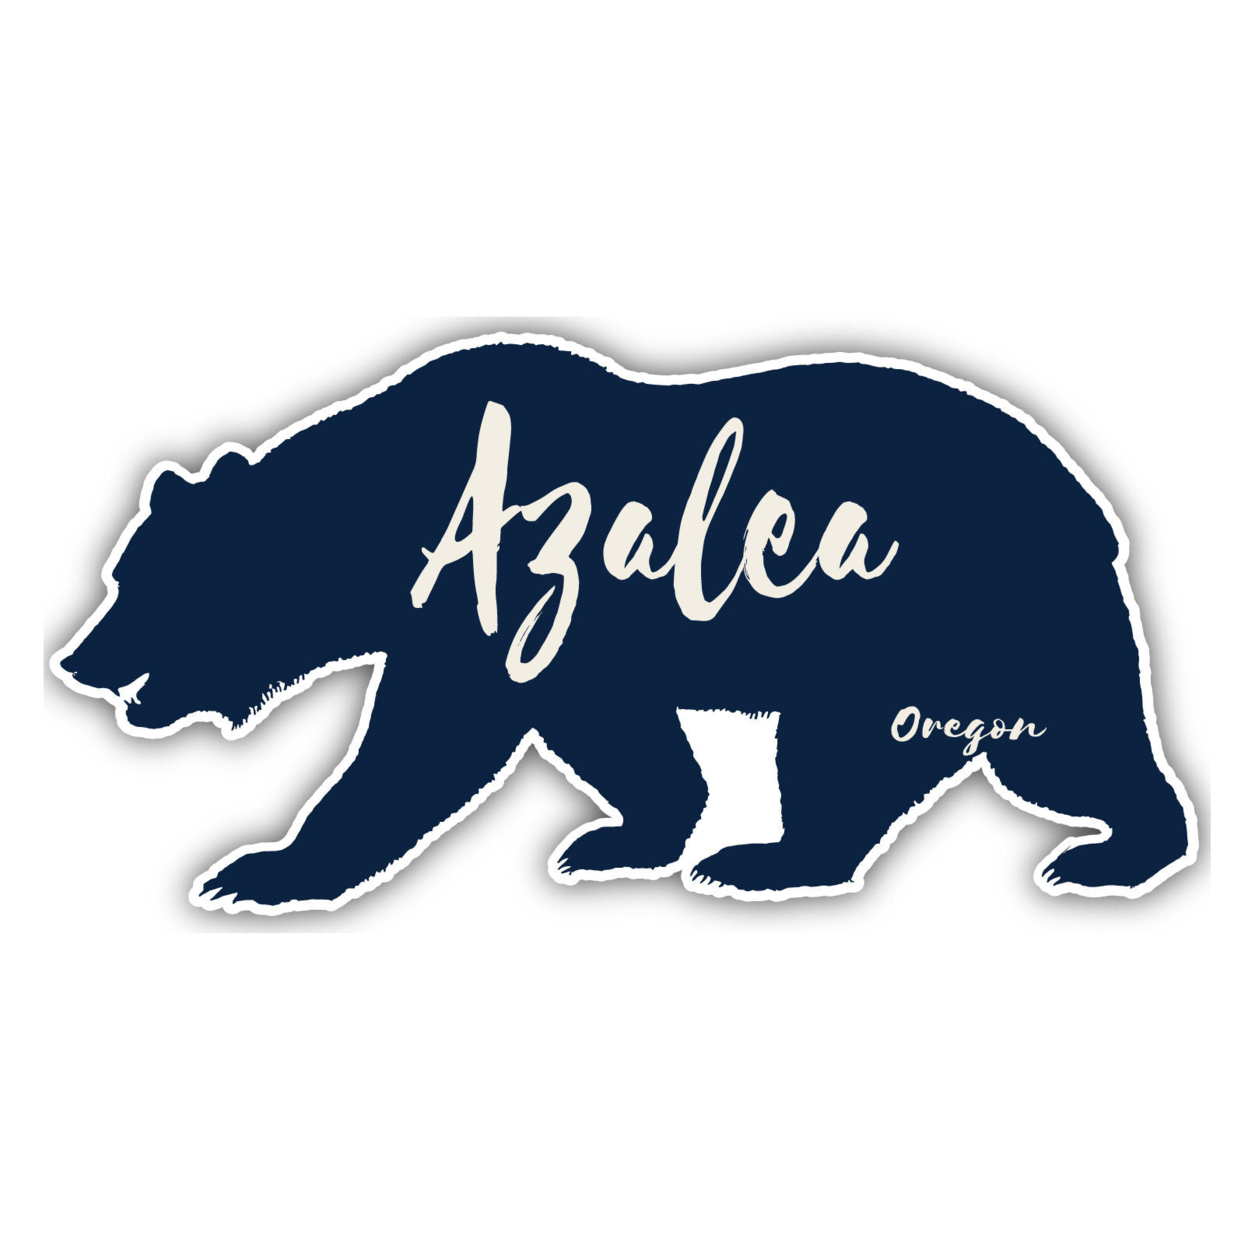 Azalea Oregon Souvenir Decorative Stickers (Choose Theme And Size) - Single Unit, 2-Inch, Bear